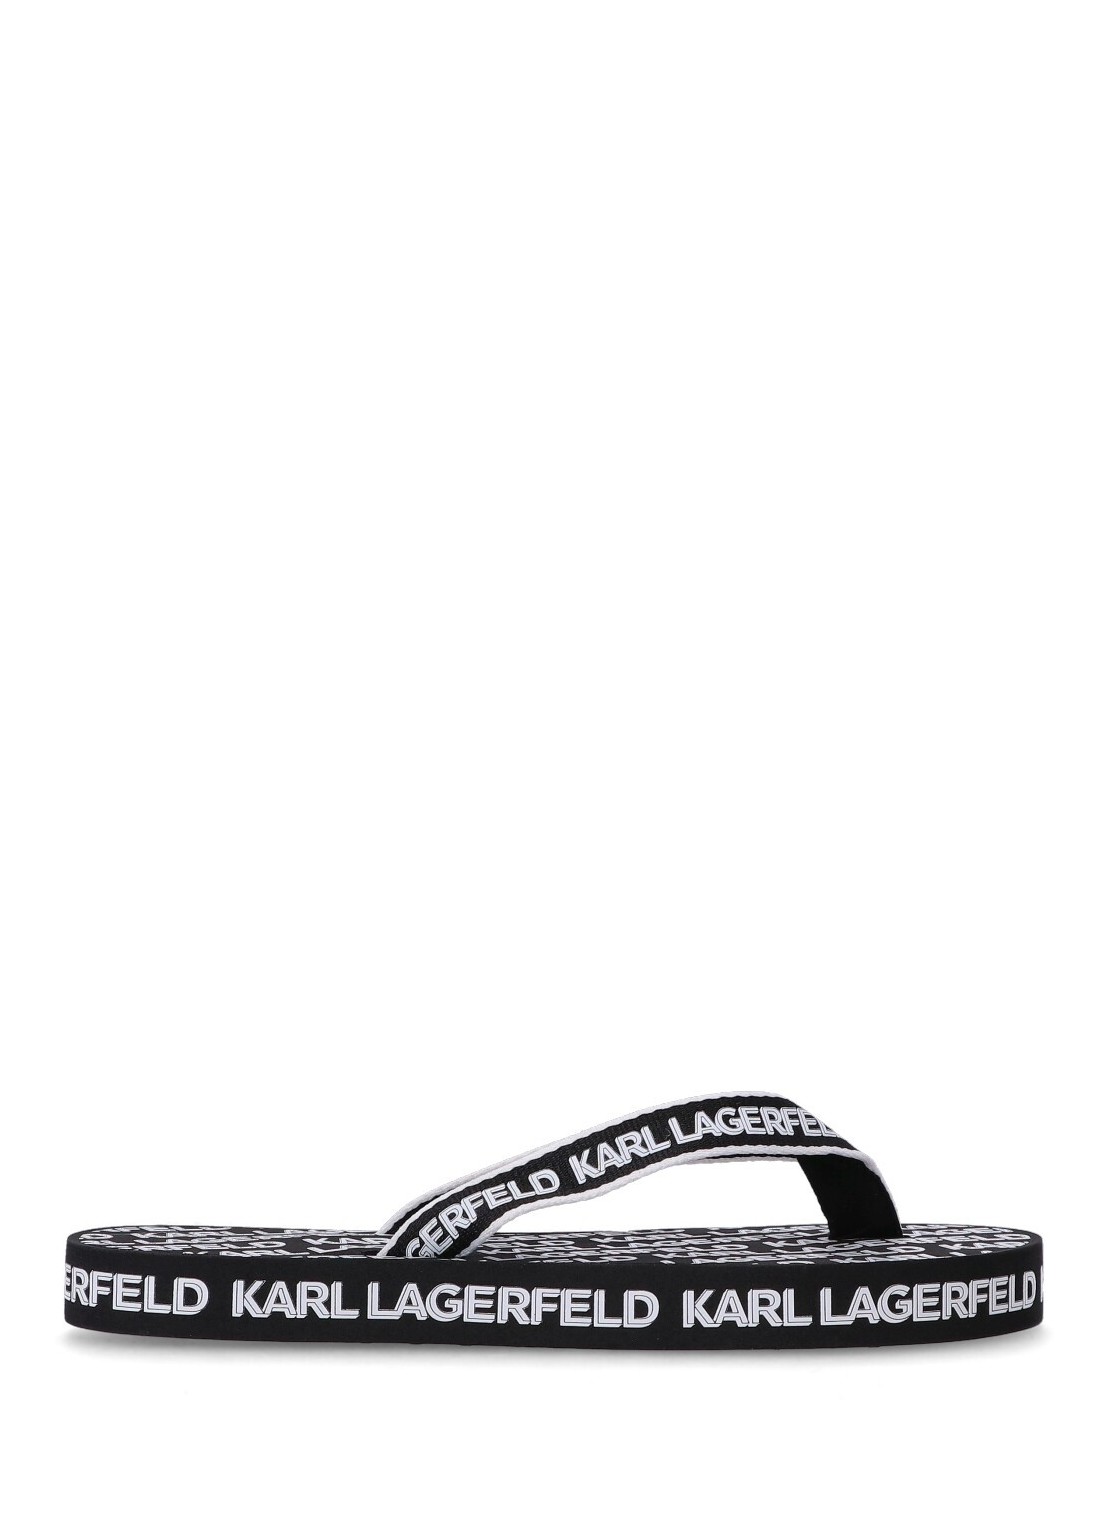 Playa karl lagerfeld beach woman kosta essential logo thong kl81003 y01 talla M
 